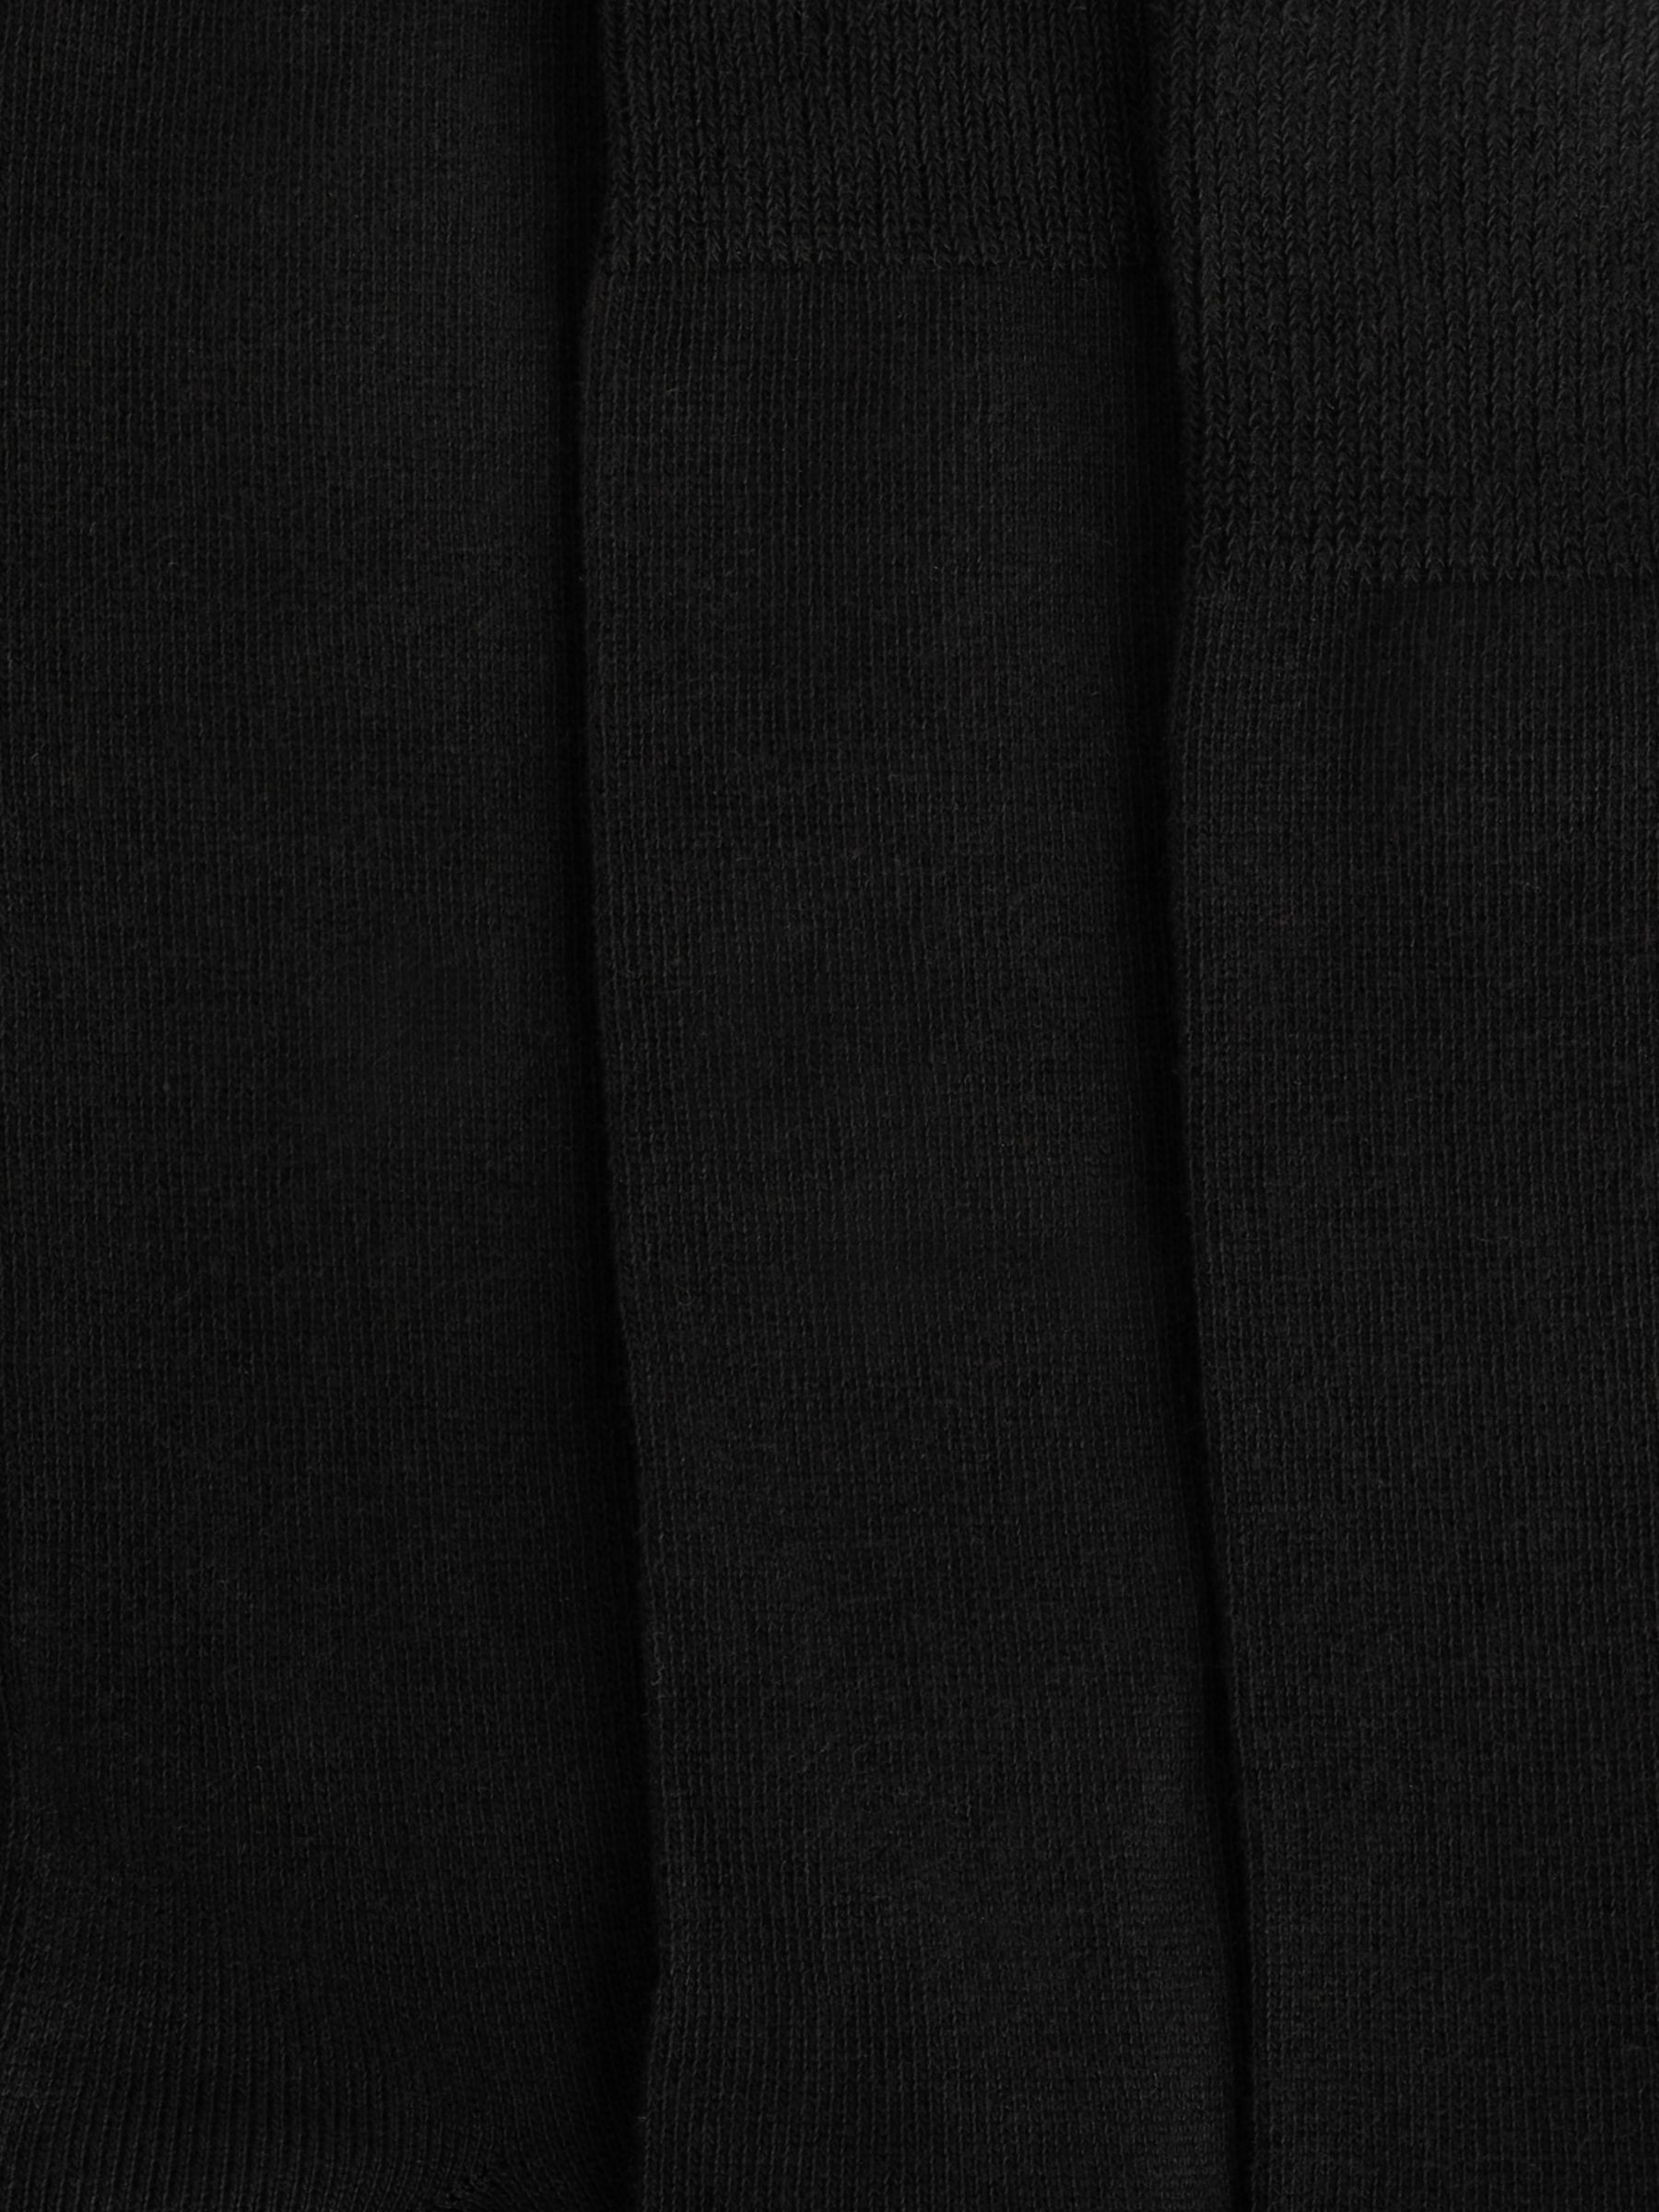 John Lewis ANYDAY Cotton Rich Plain Socks, Pack of 5, Black, S